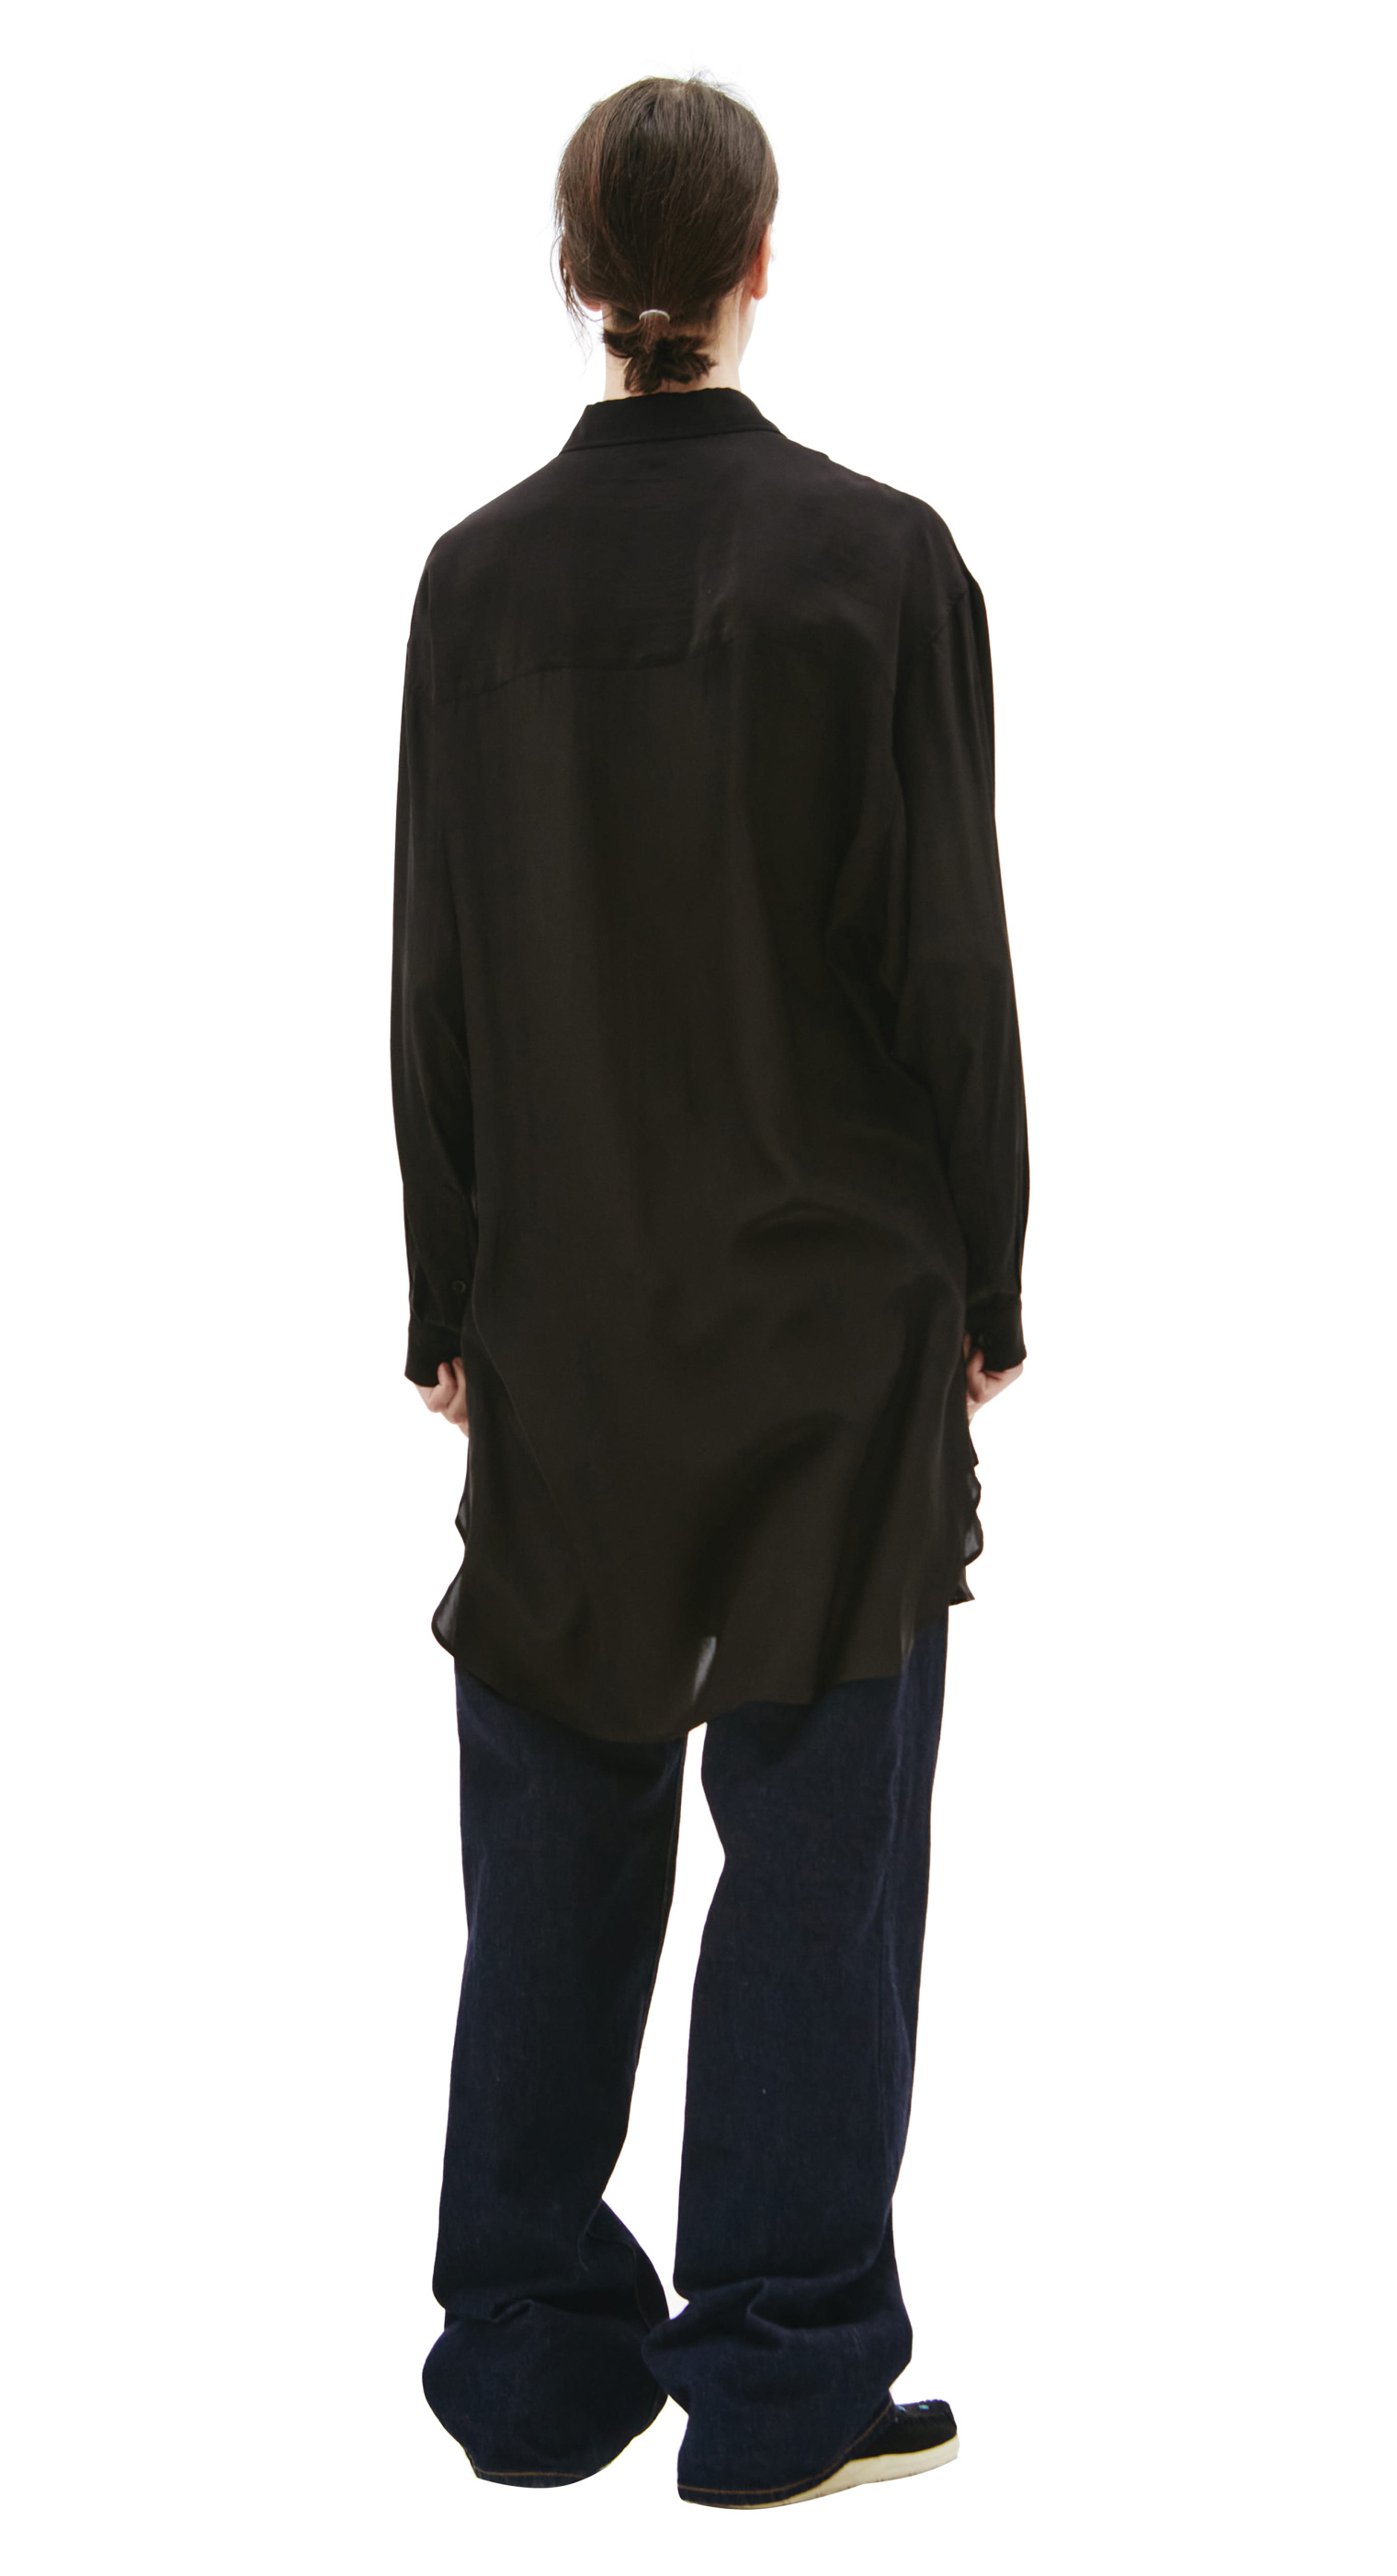 Buy Yohji Yamamoto men black dahlia print silk shirt for $2,515 online